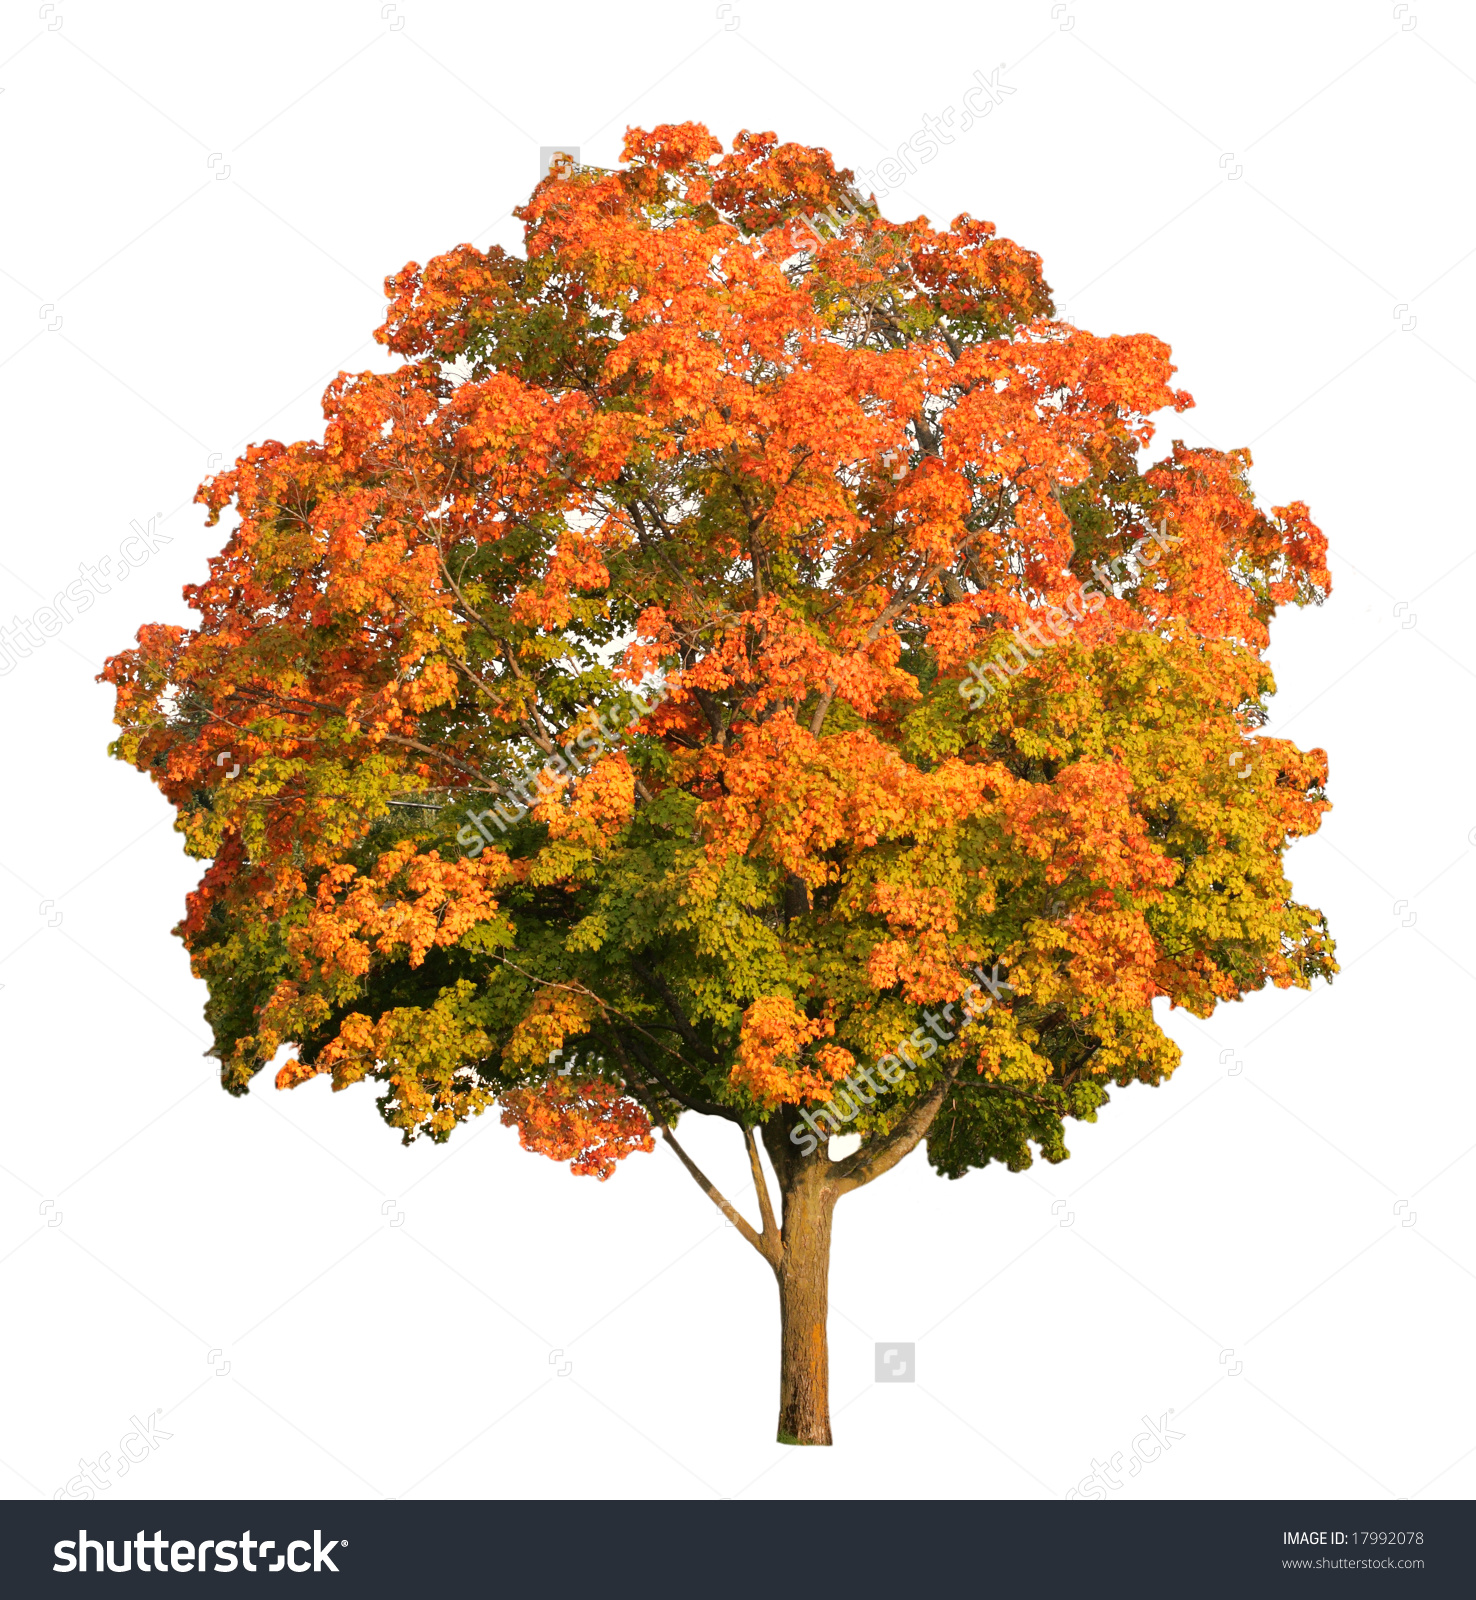 clipart maple tree - photo #12